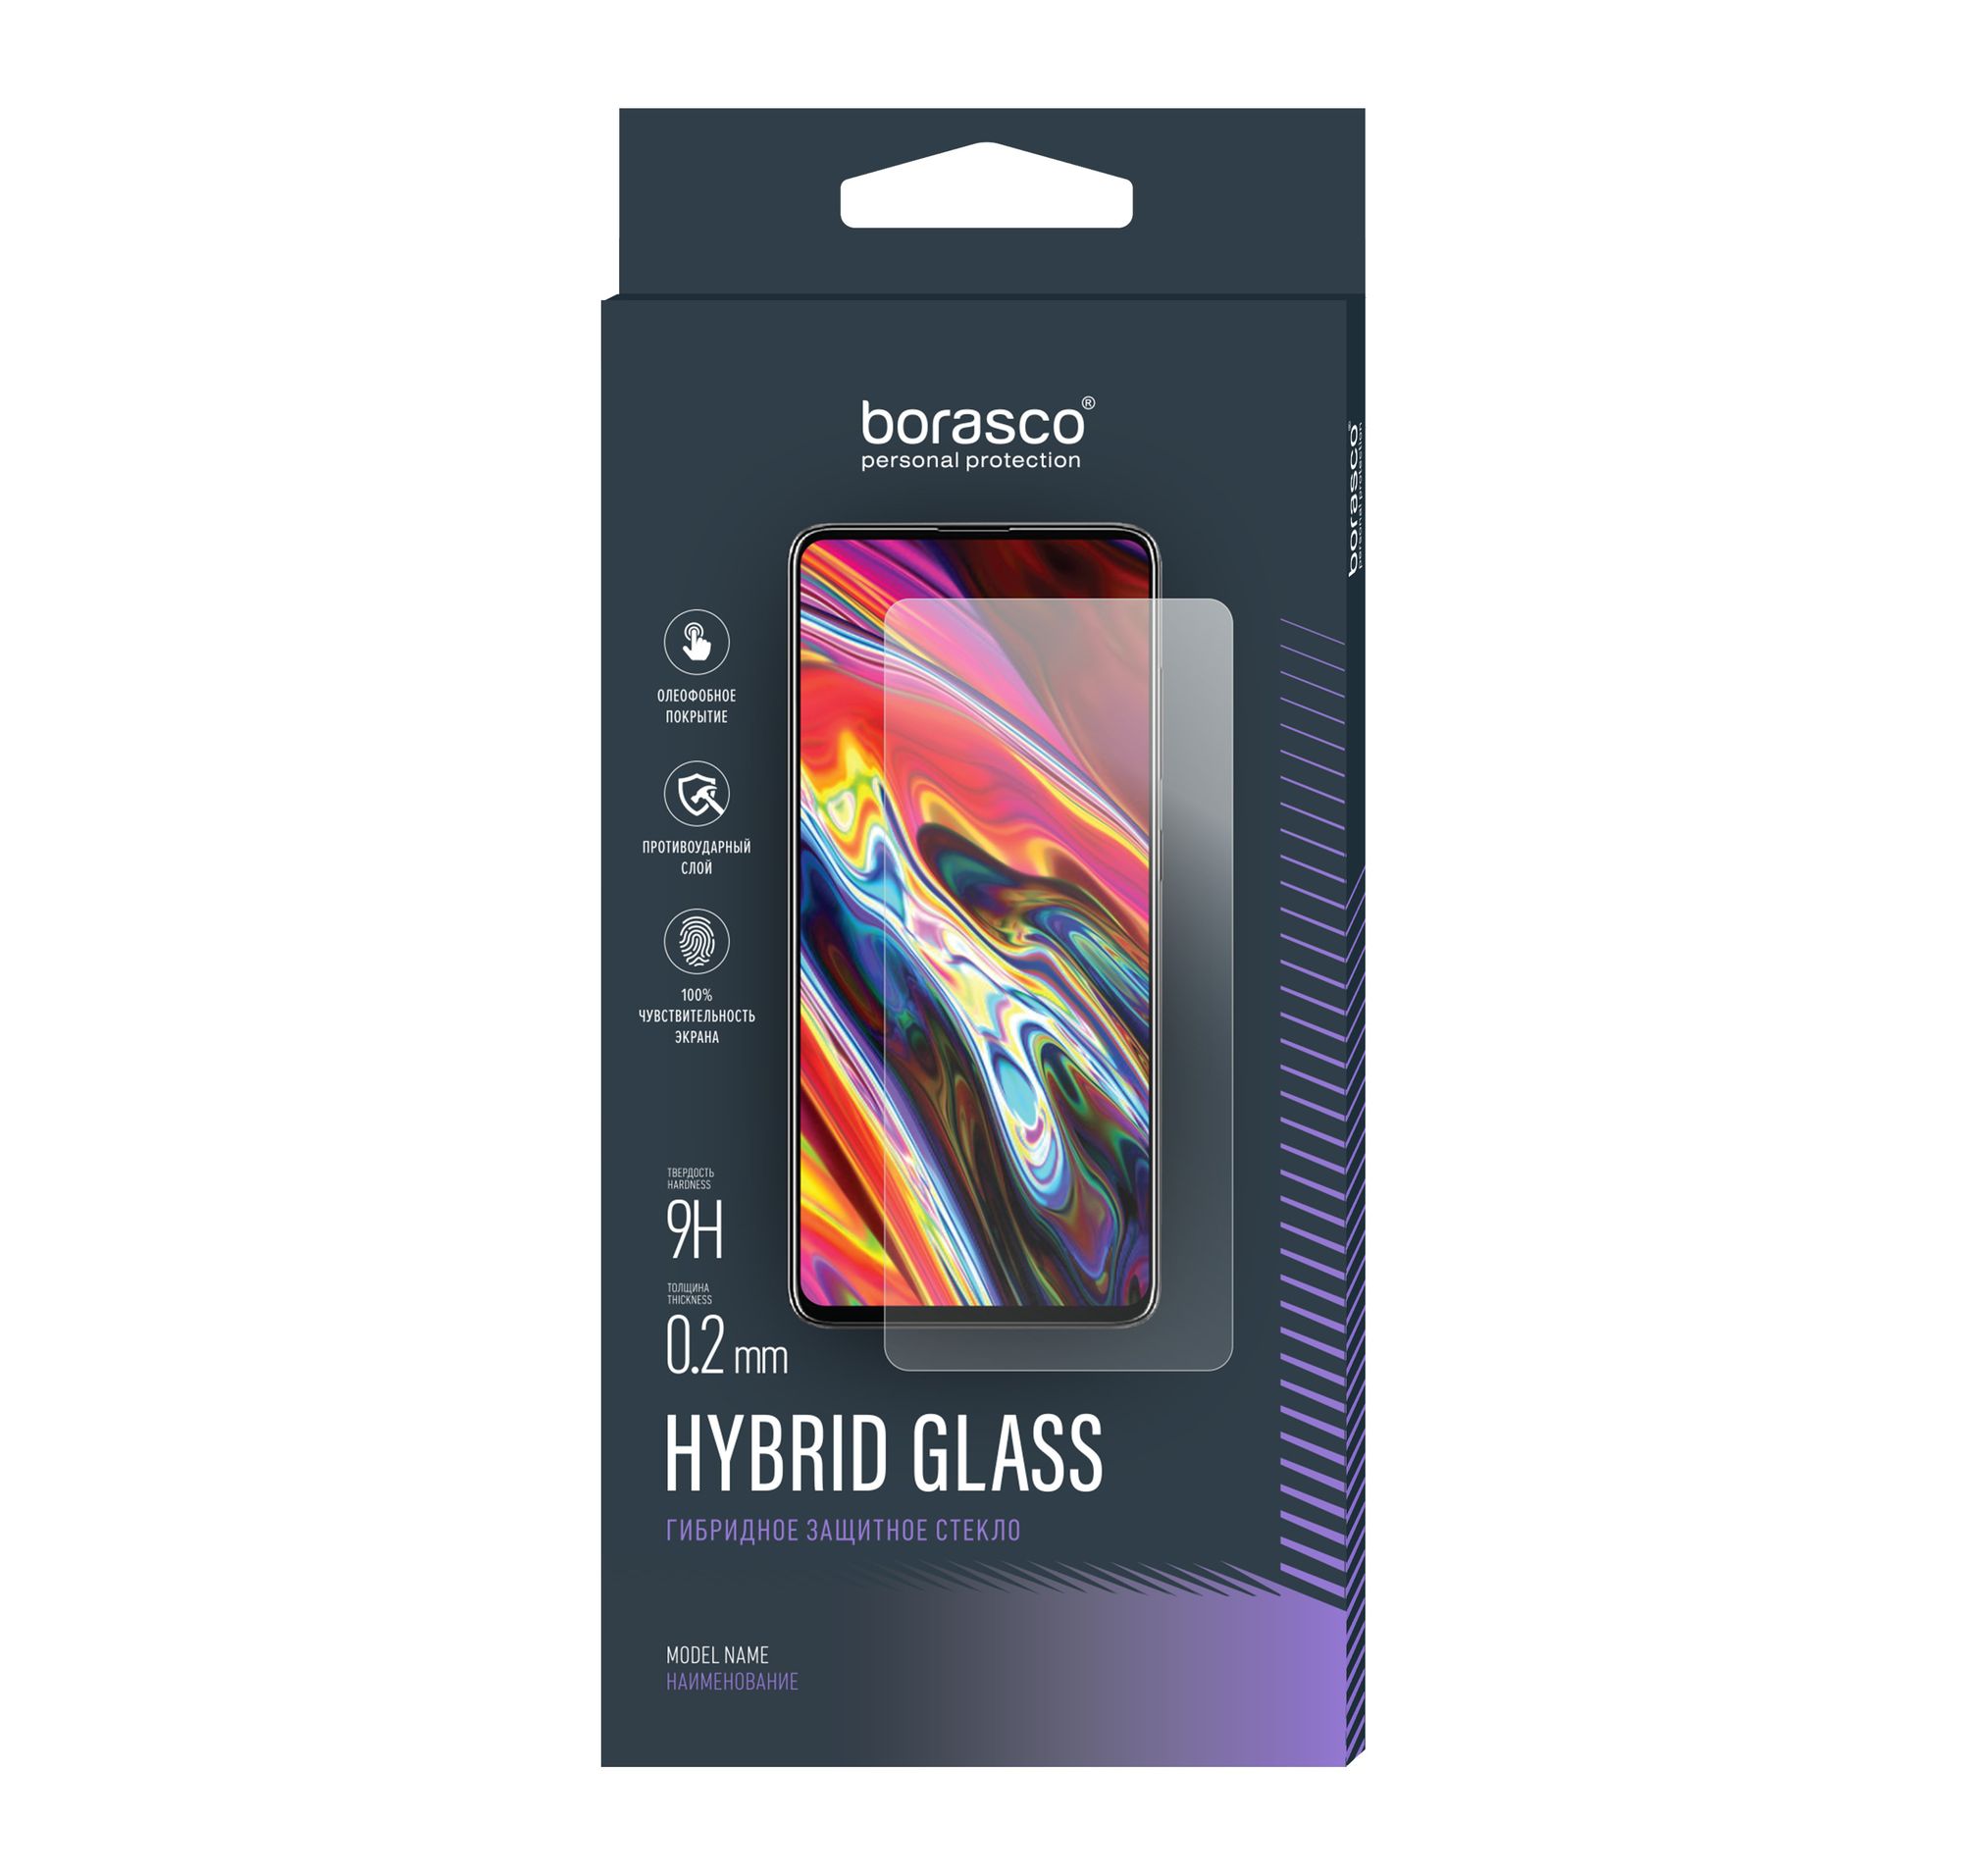 Гибридное стекло Hybrid Glass VSP 0,26 мм для Nokia 5.3 цена и фото